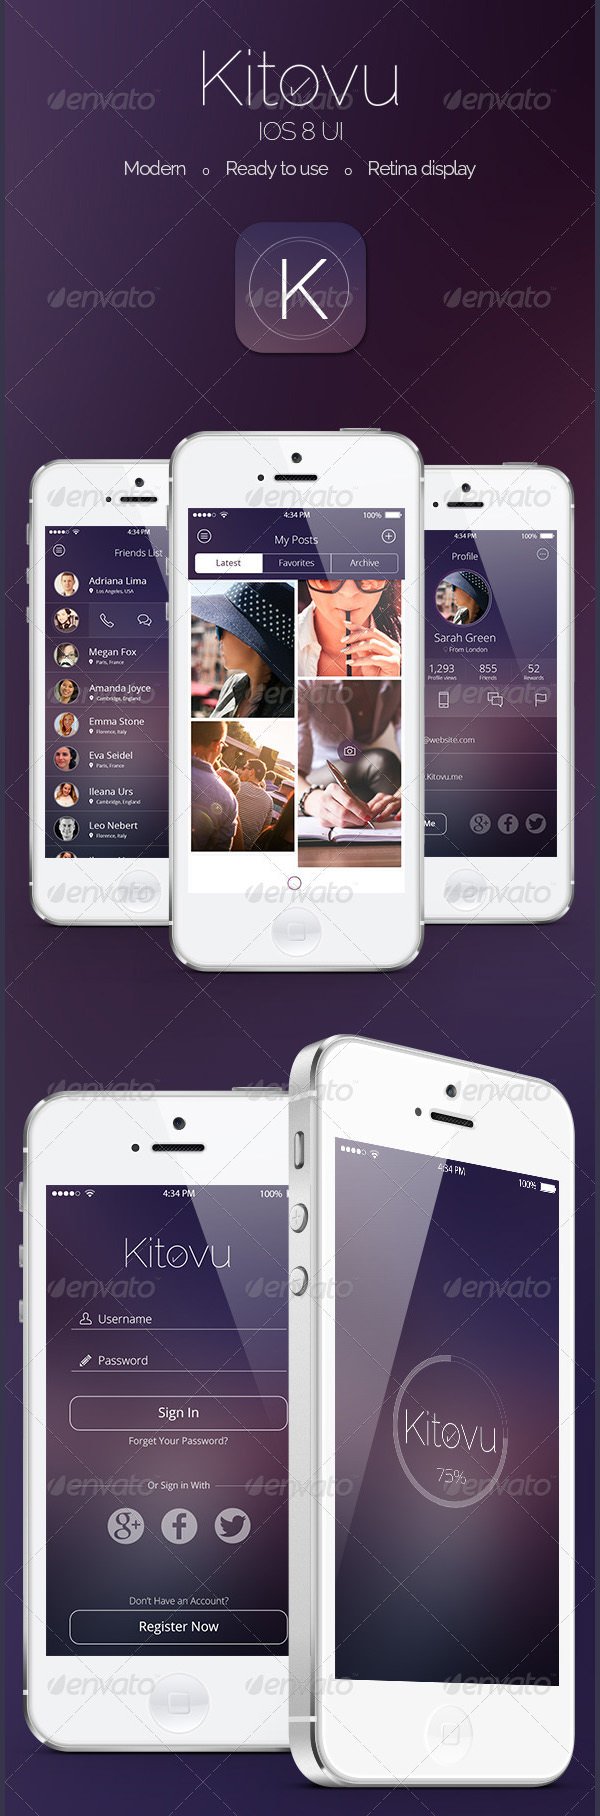 kitovu ios 8 app design